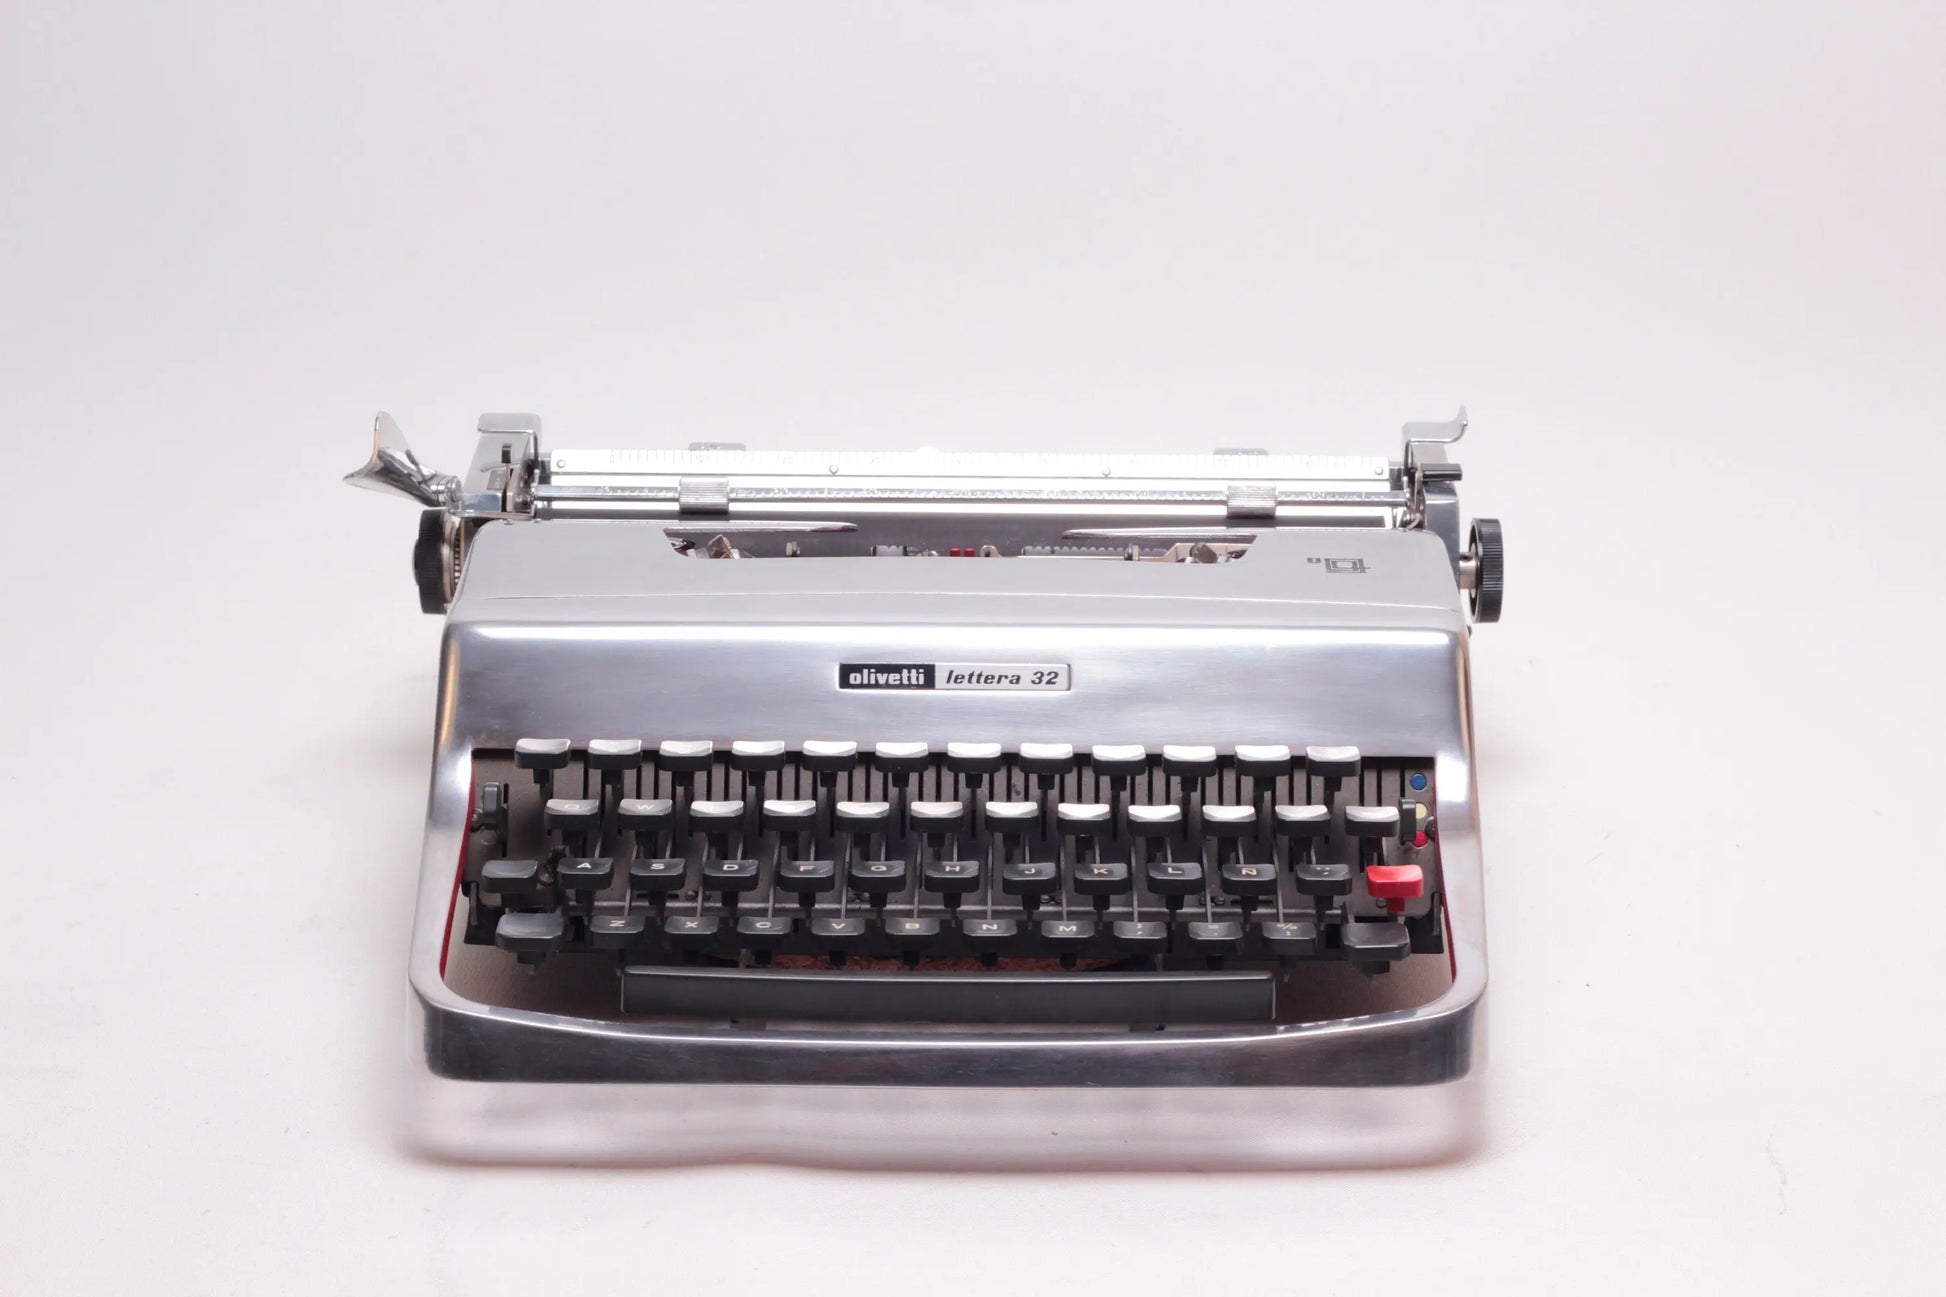 SALE! - Limited Edition Olivetti Lettera 32 "Chrome" Aluminum Typewriter, Vintage, Professionally Serviced - ElGranero Typewriter.Company